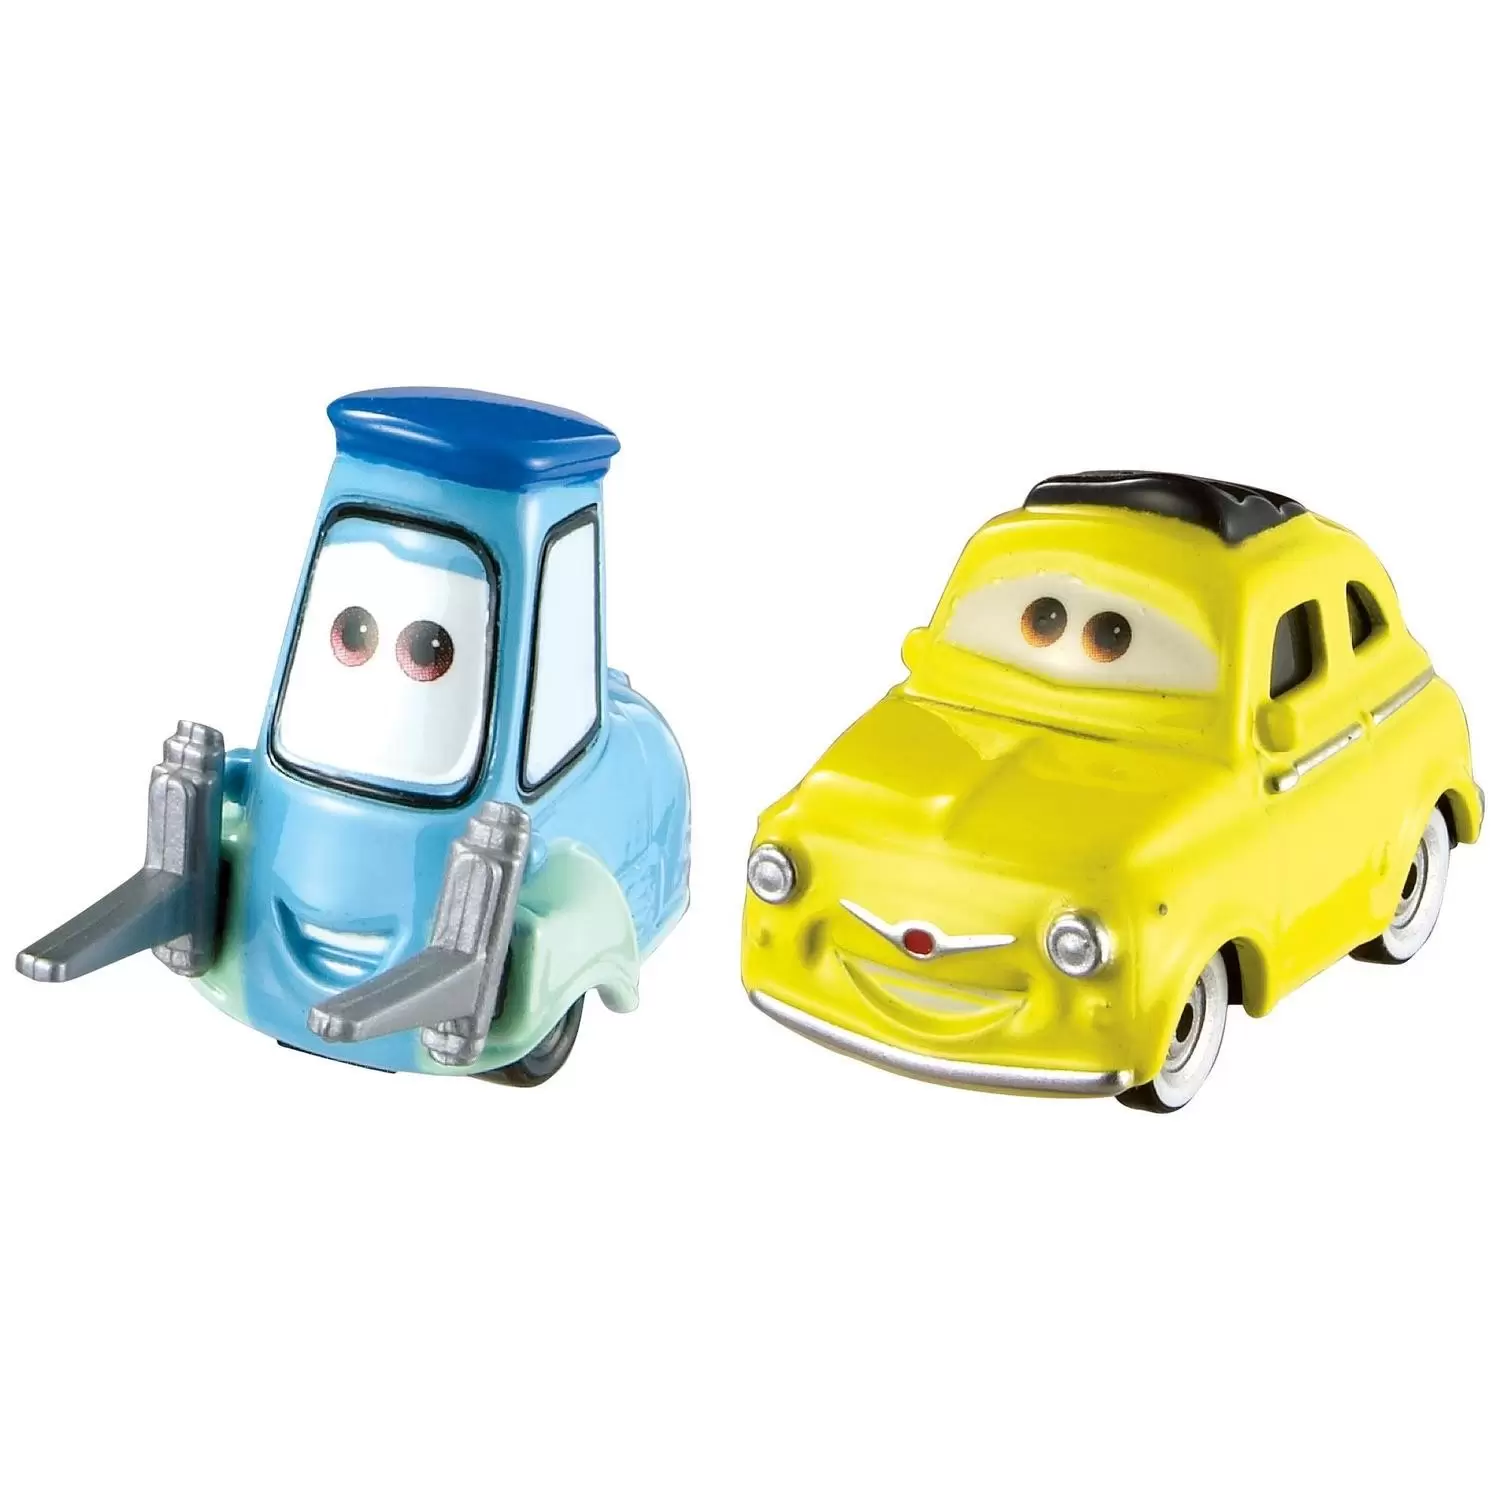 Cars 3 - Luigi and Guido